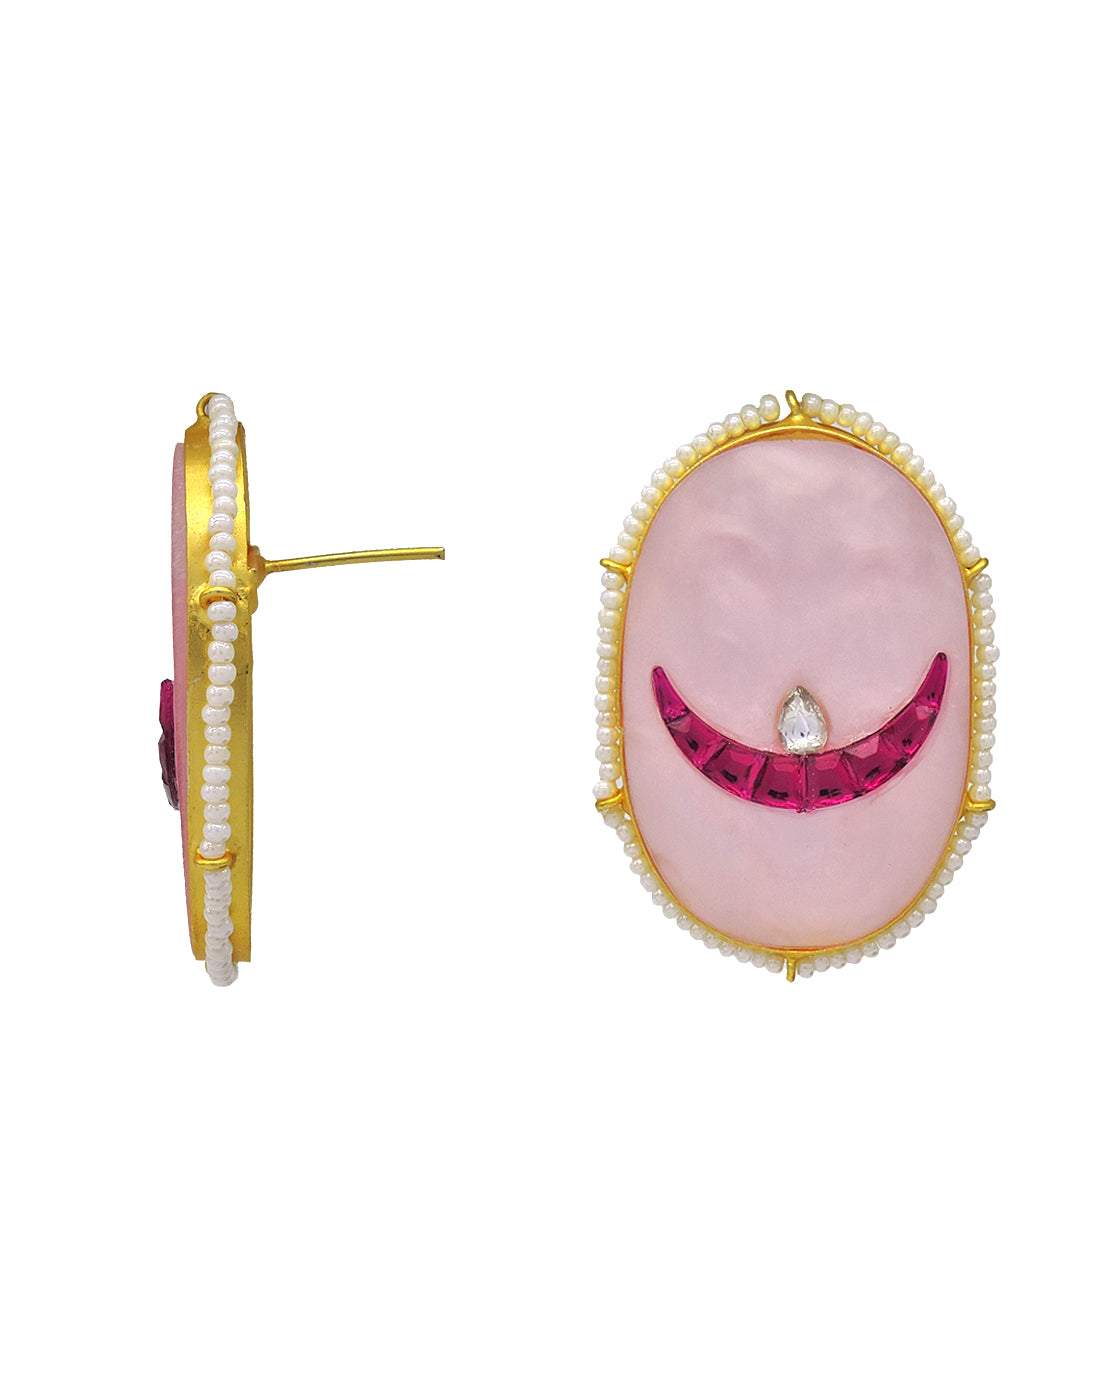 Oval Half Moon Earrings - Statement Earrings - Gold-Plated & Hypoallergenic - Made in India - Dubai Jewellery - Dori